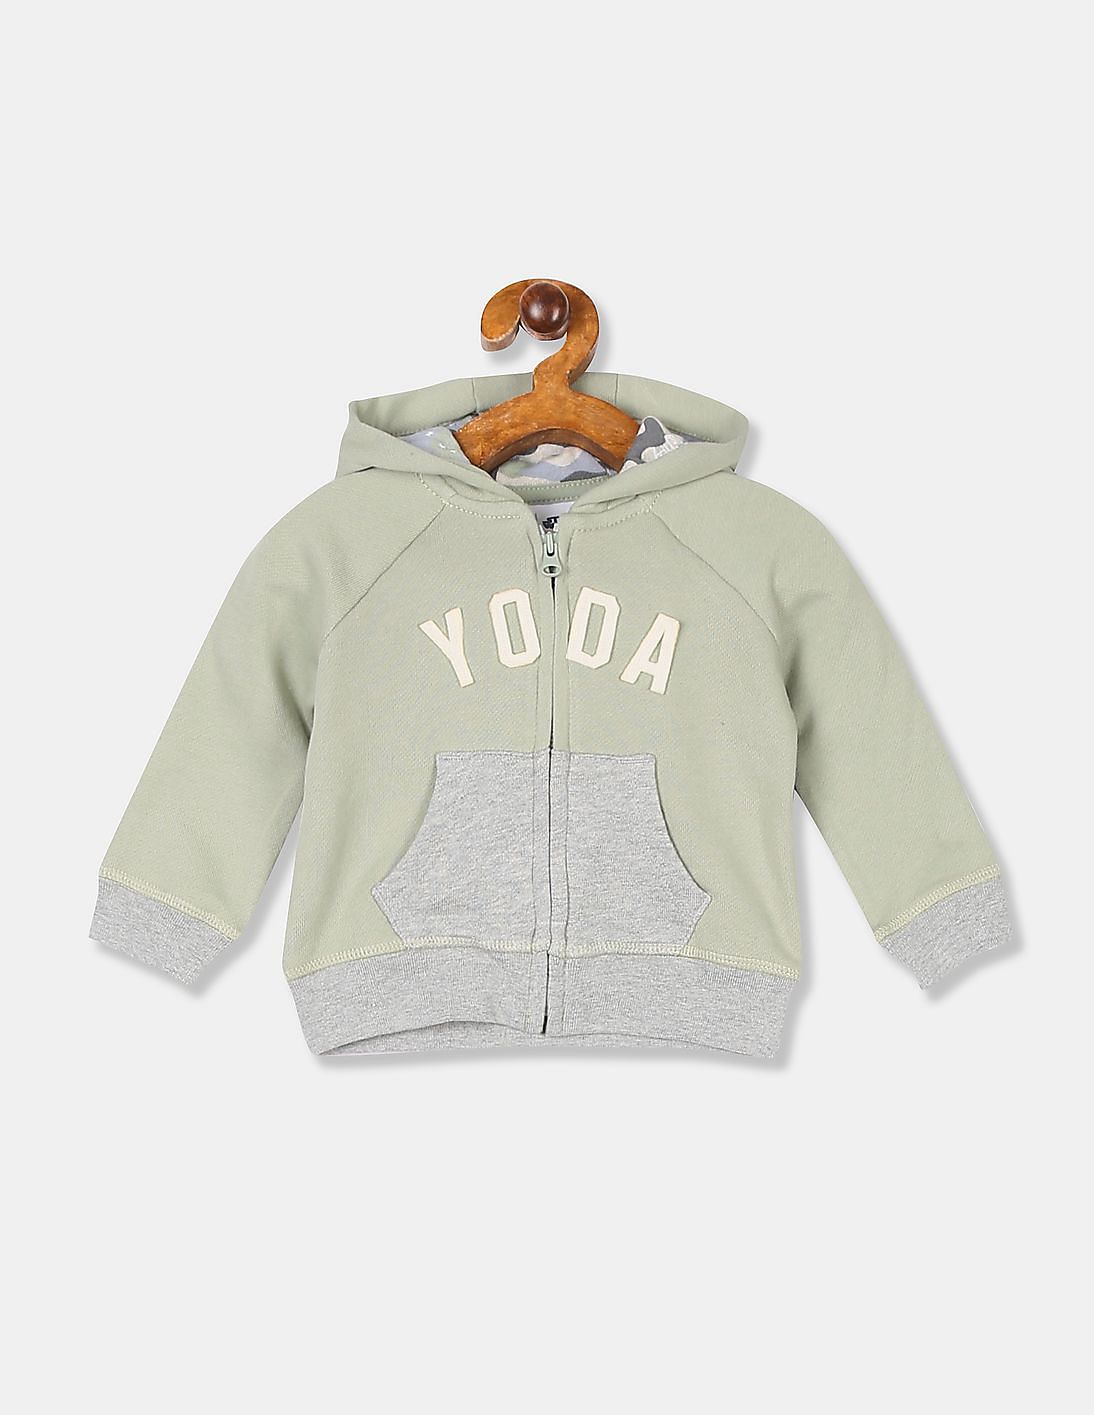 yoda hoodie